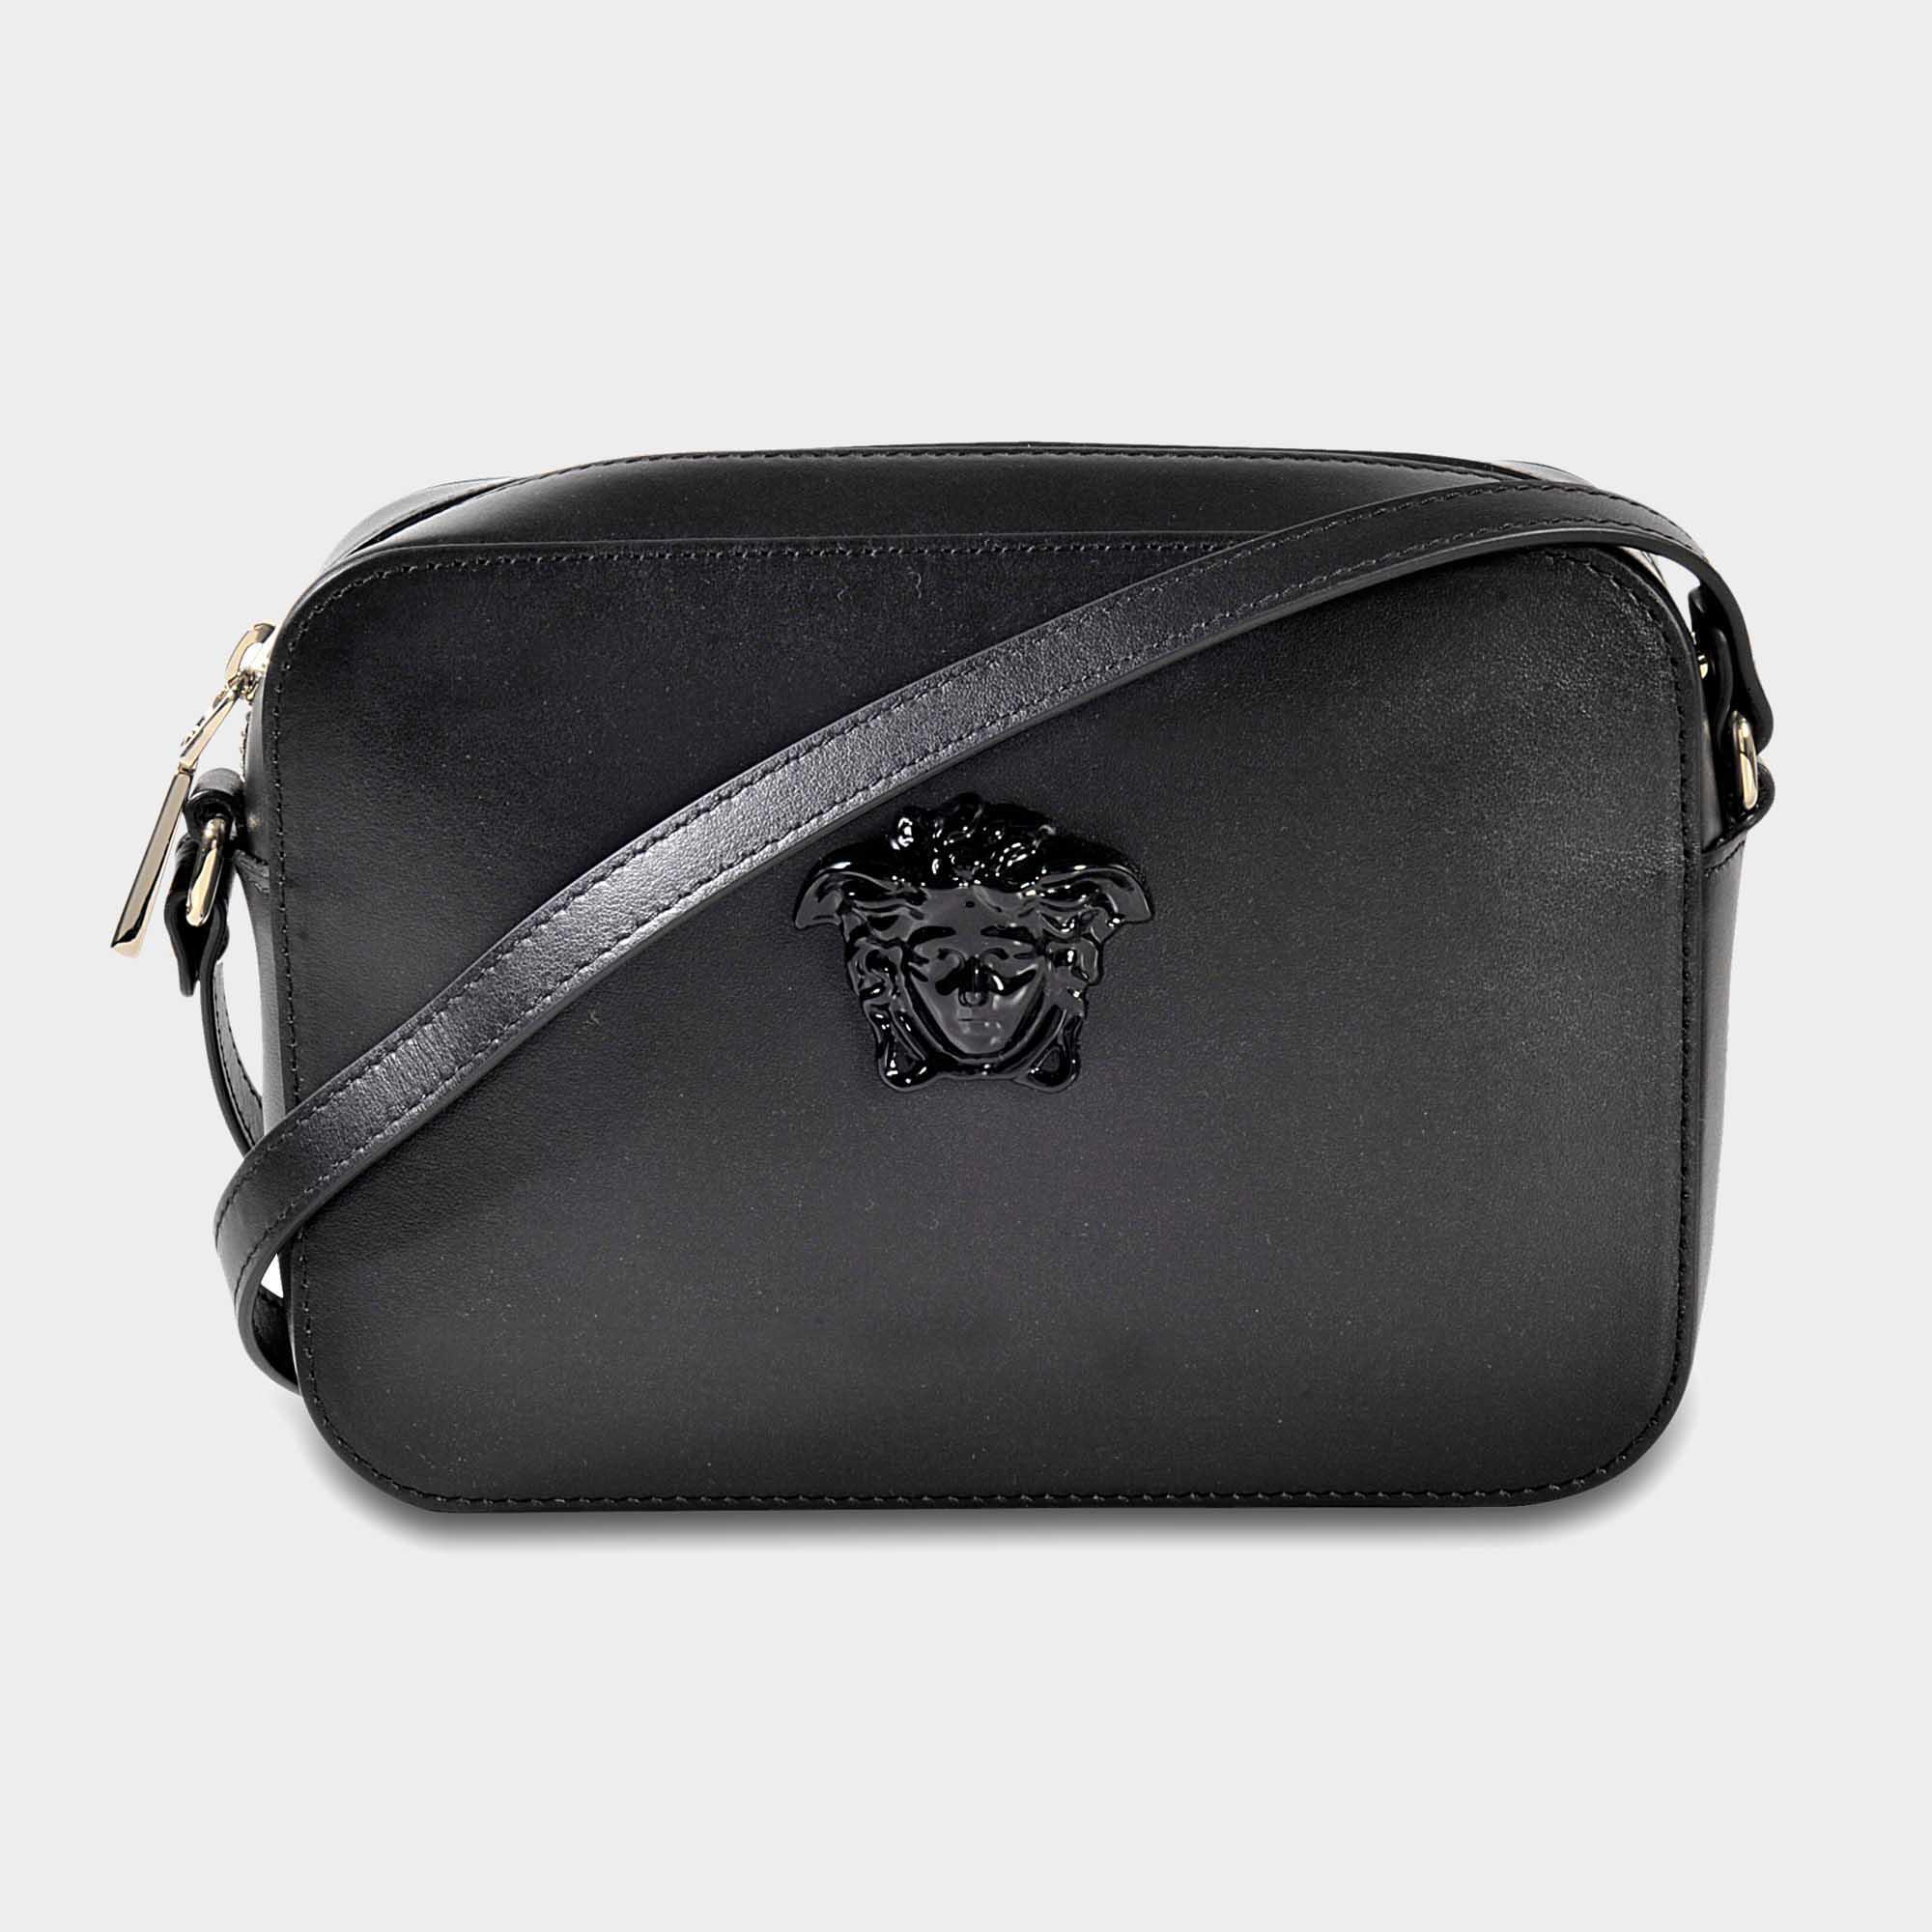 Versace Palazzo Camera Bag in Black - Lyst